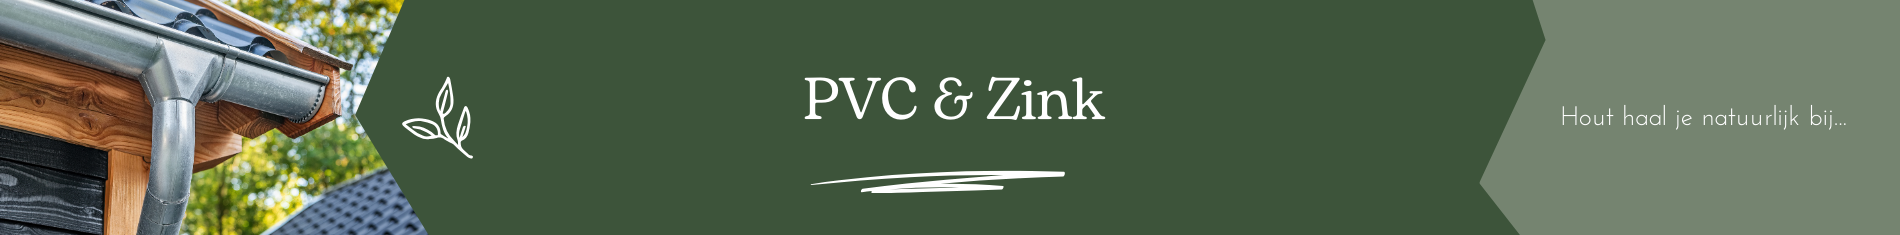 PVC & Zink